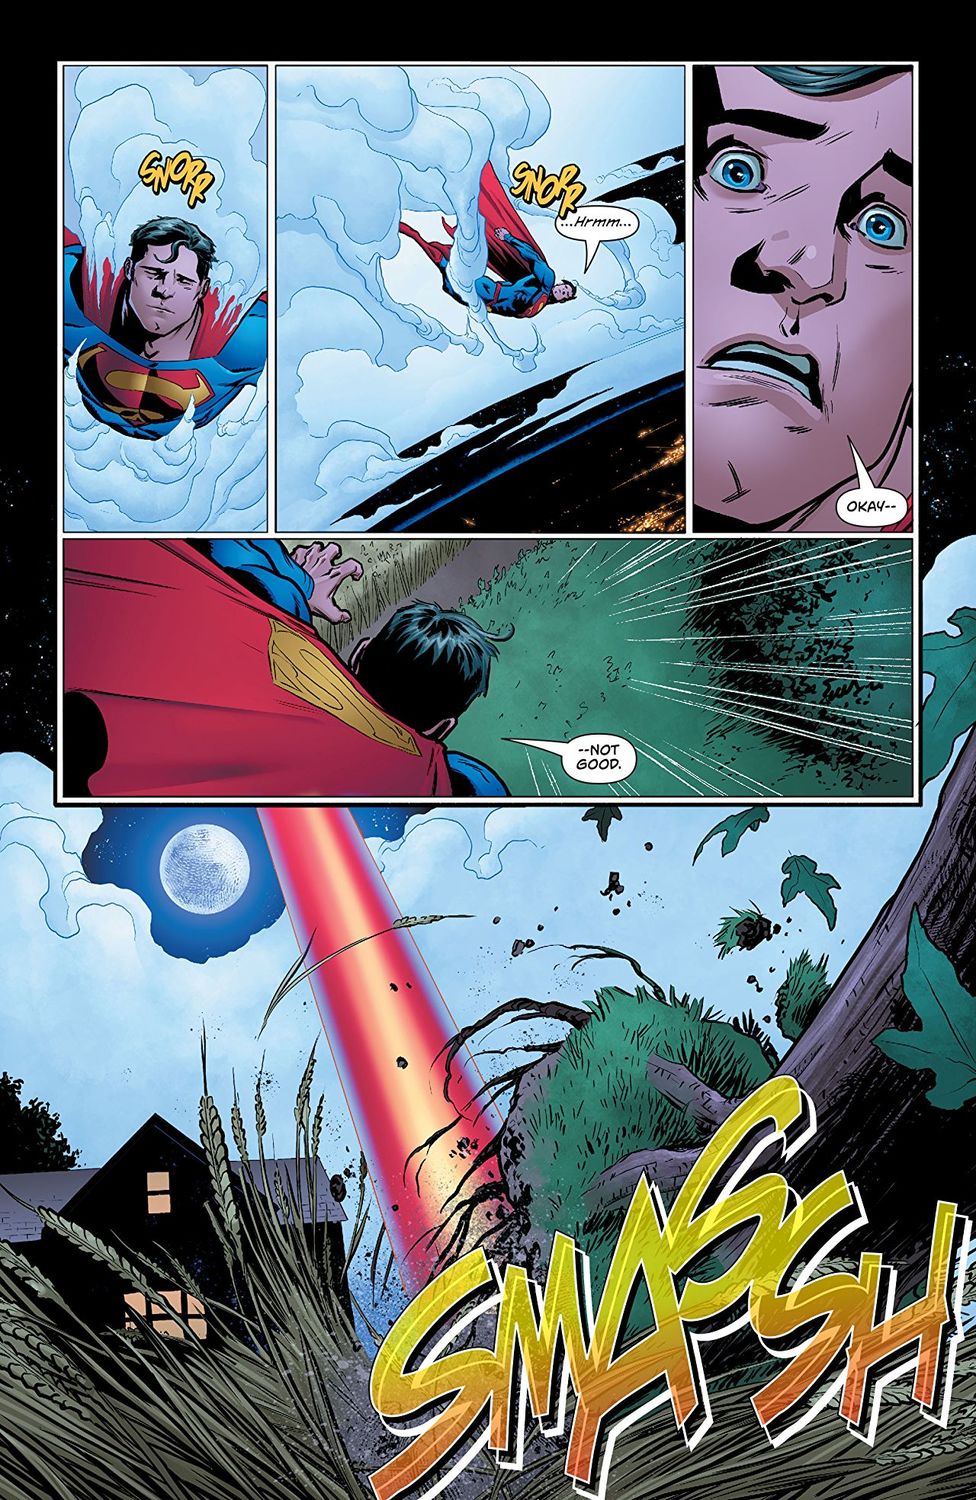 DC Universe Rebirth. Superman. Vol. 5: Black Dawn TPB